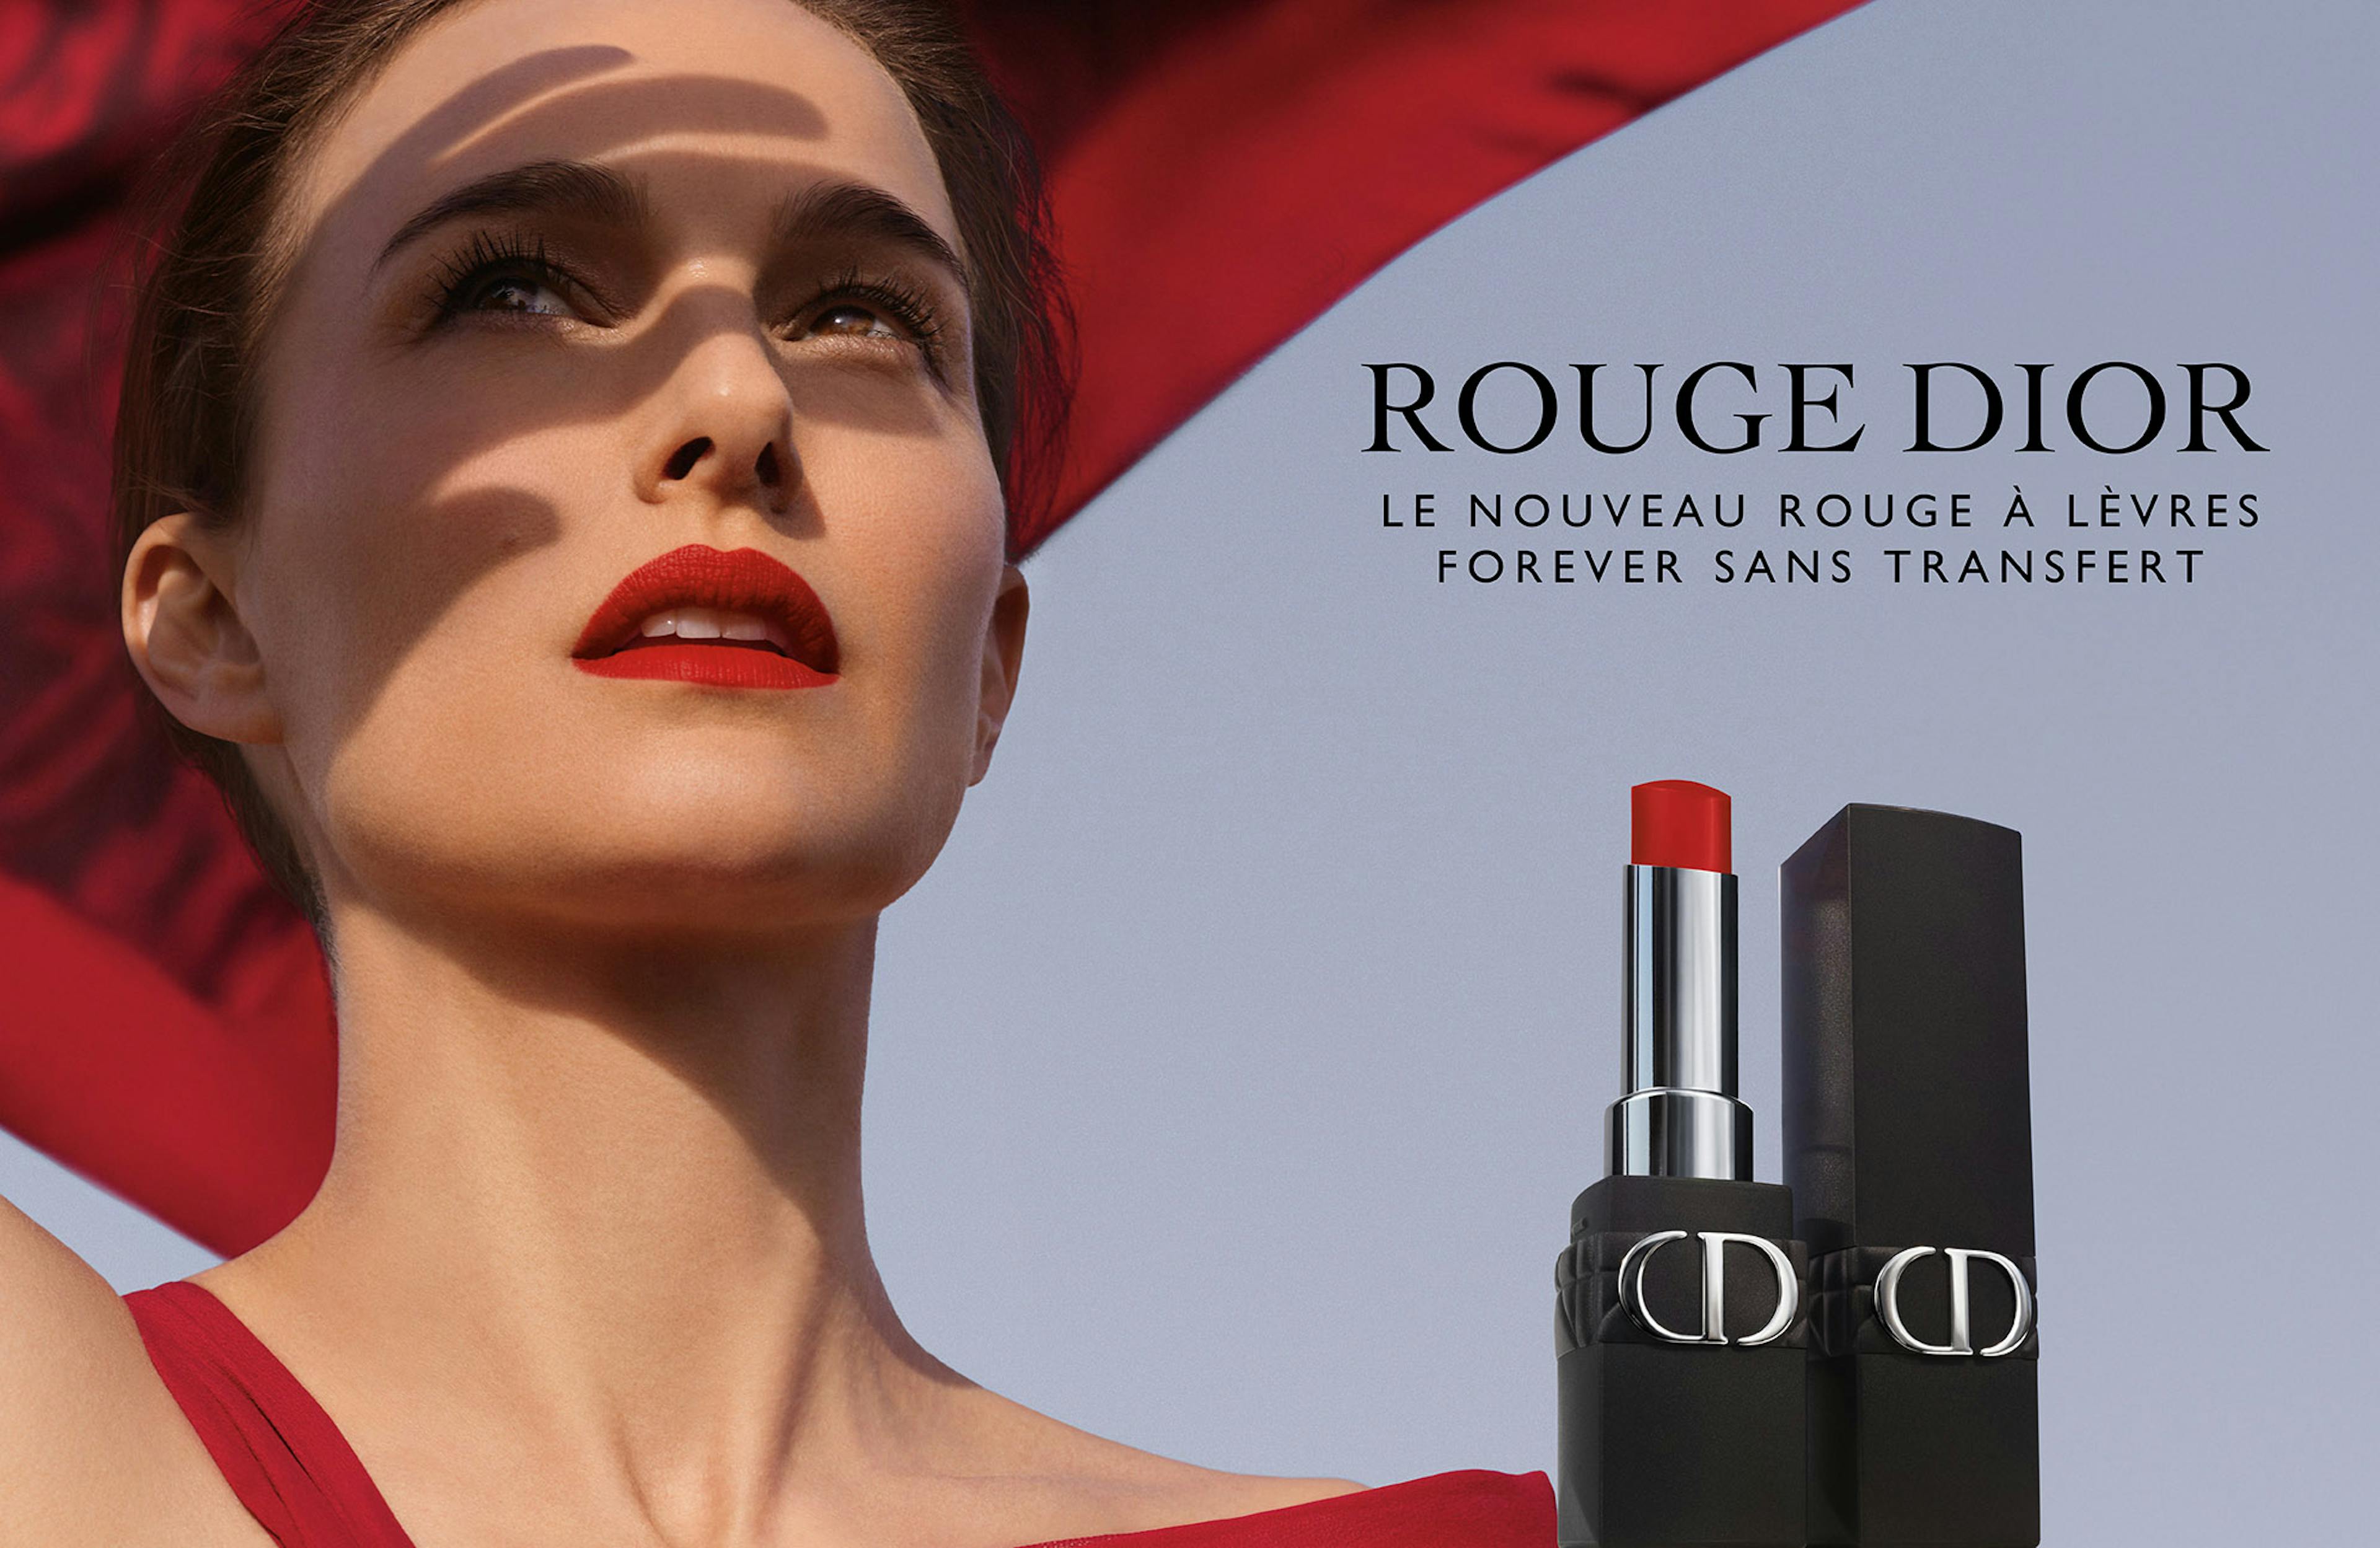 ROUGE DIOR © Parfums Christian Dior